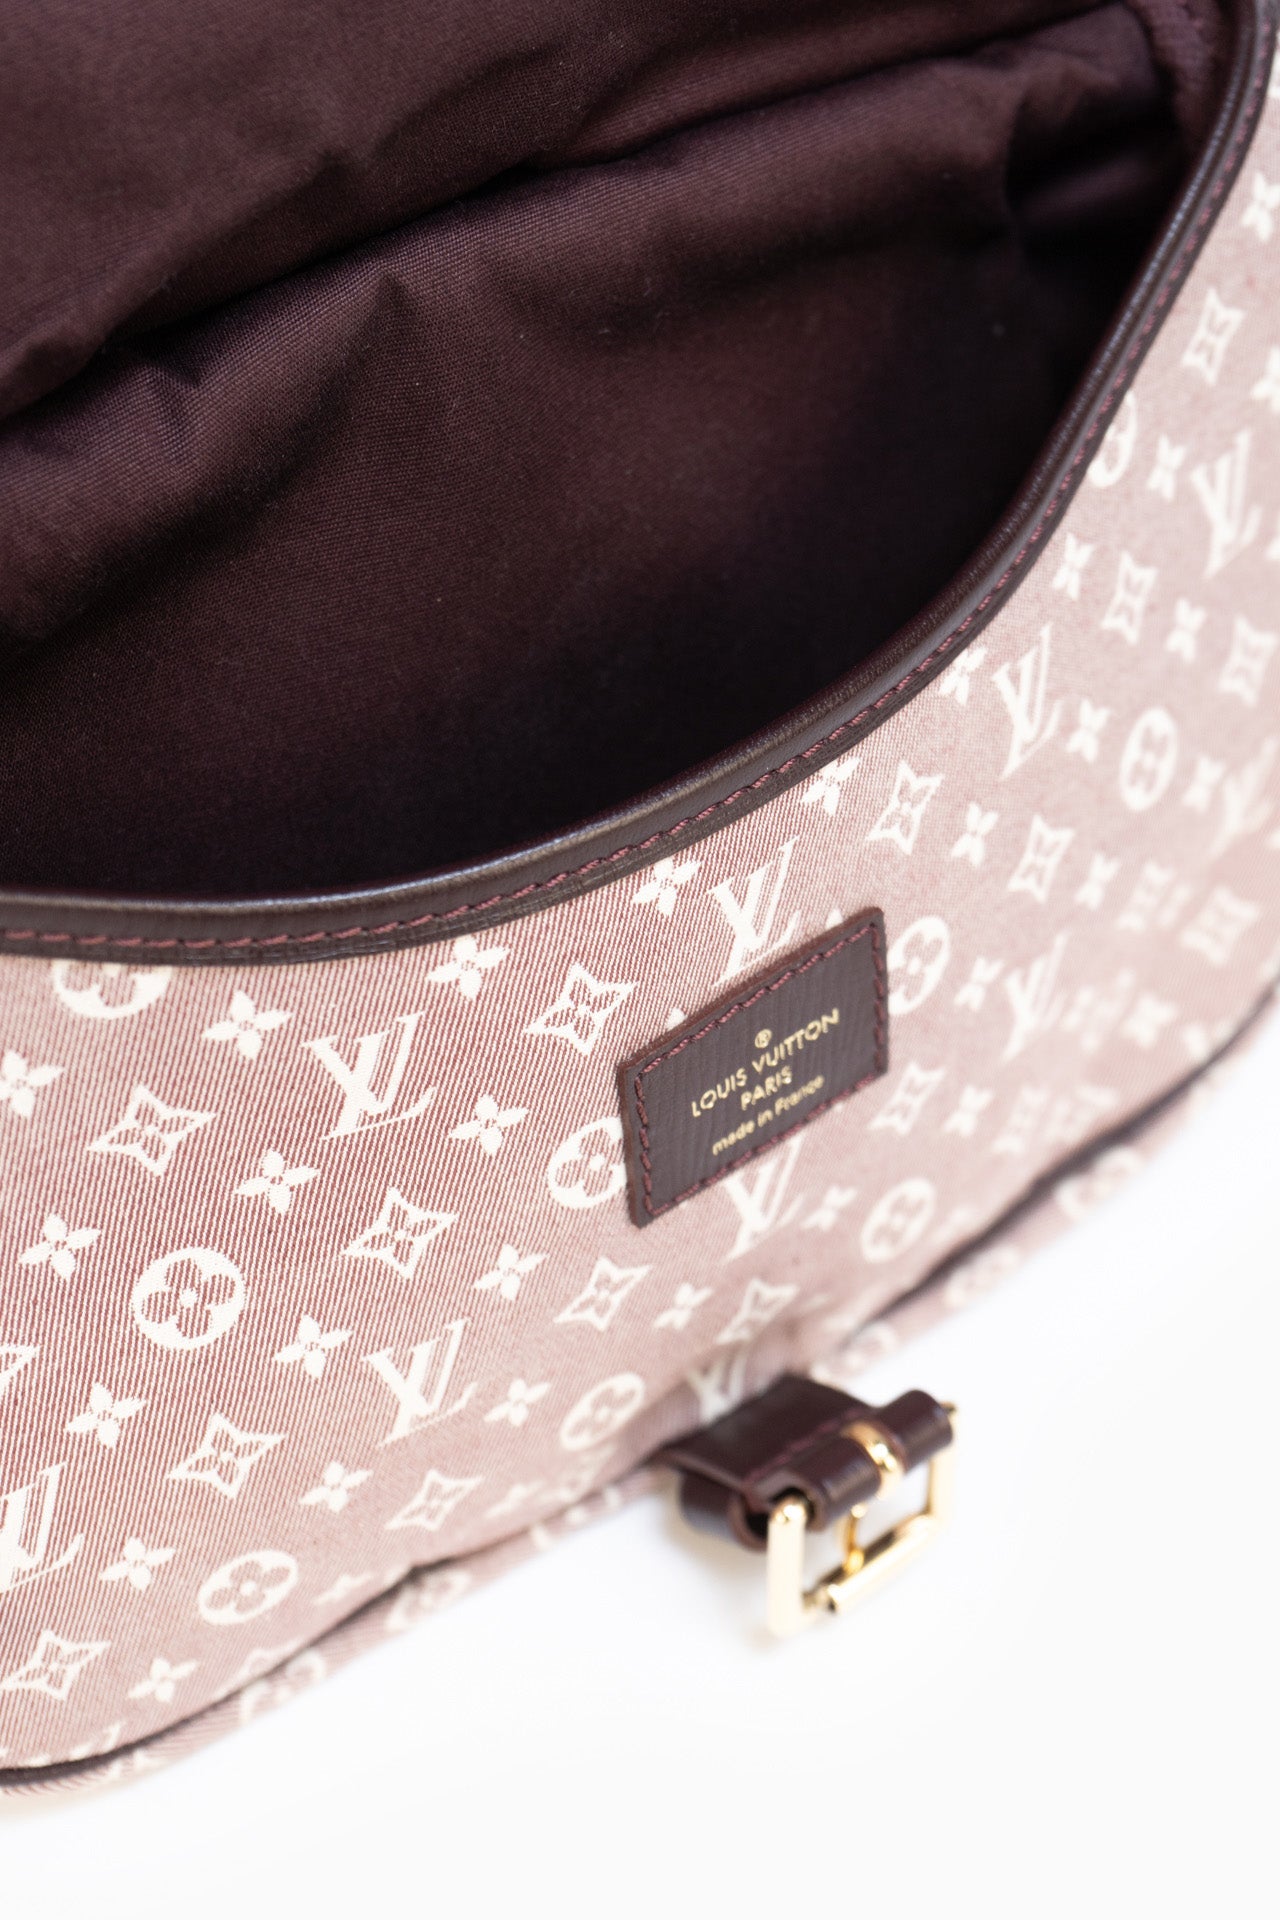 Louis Vuitton Samur Indly With Dust bag